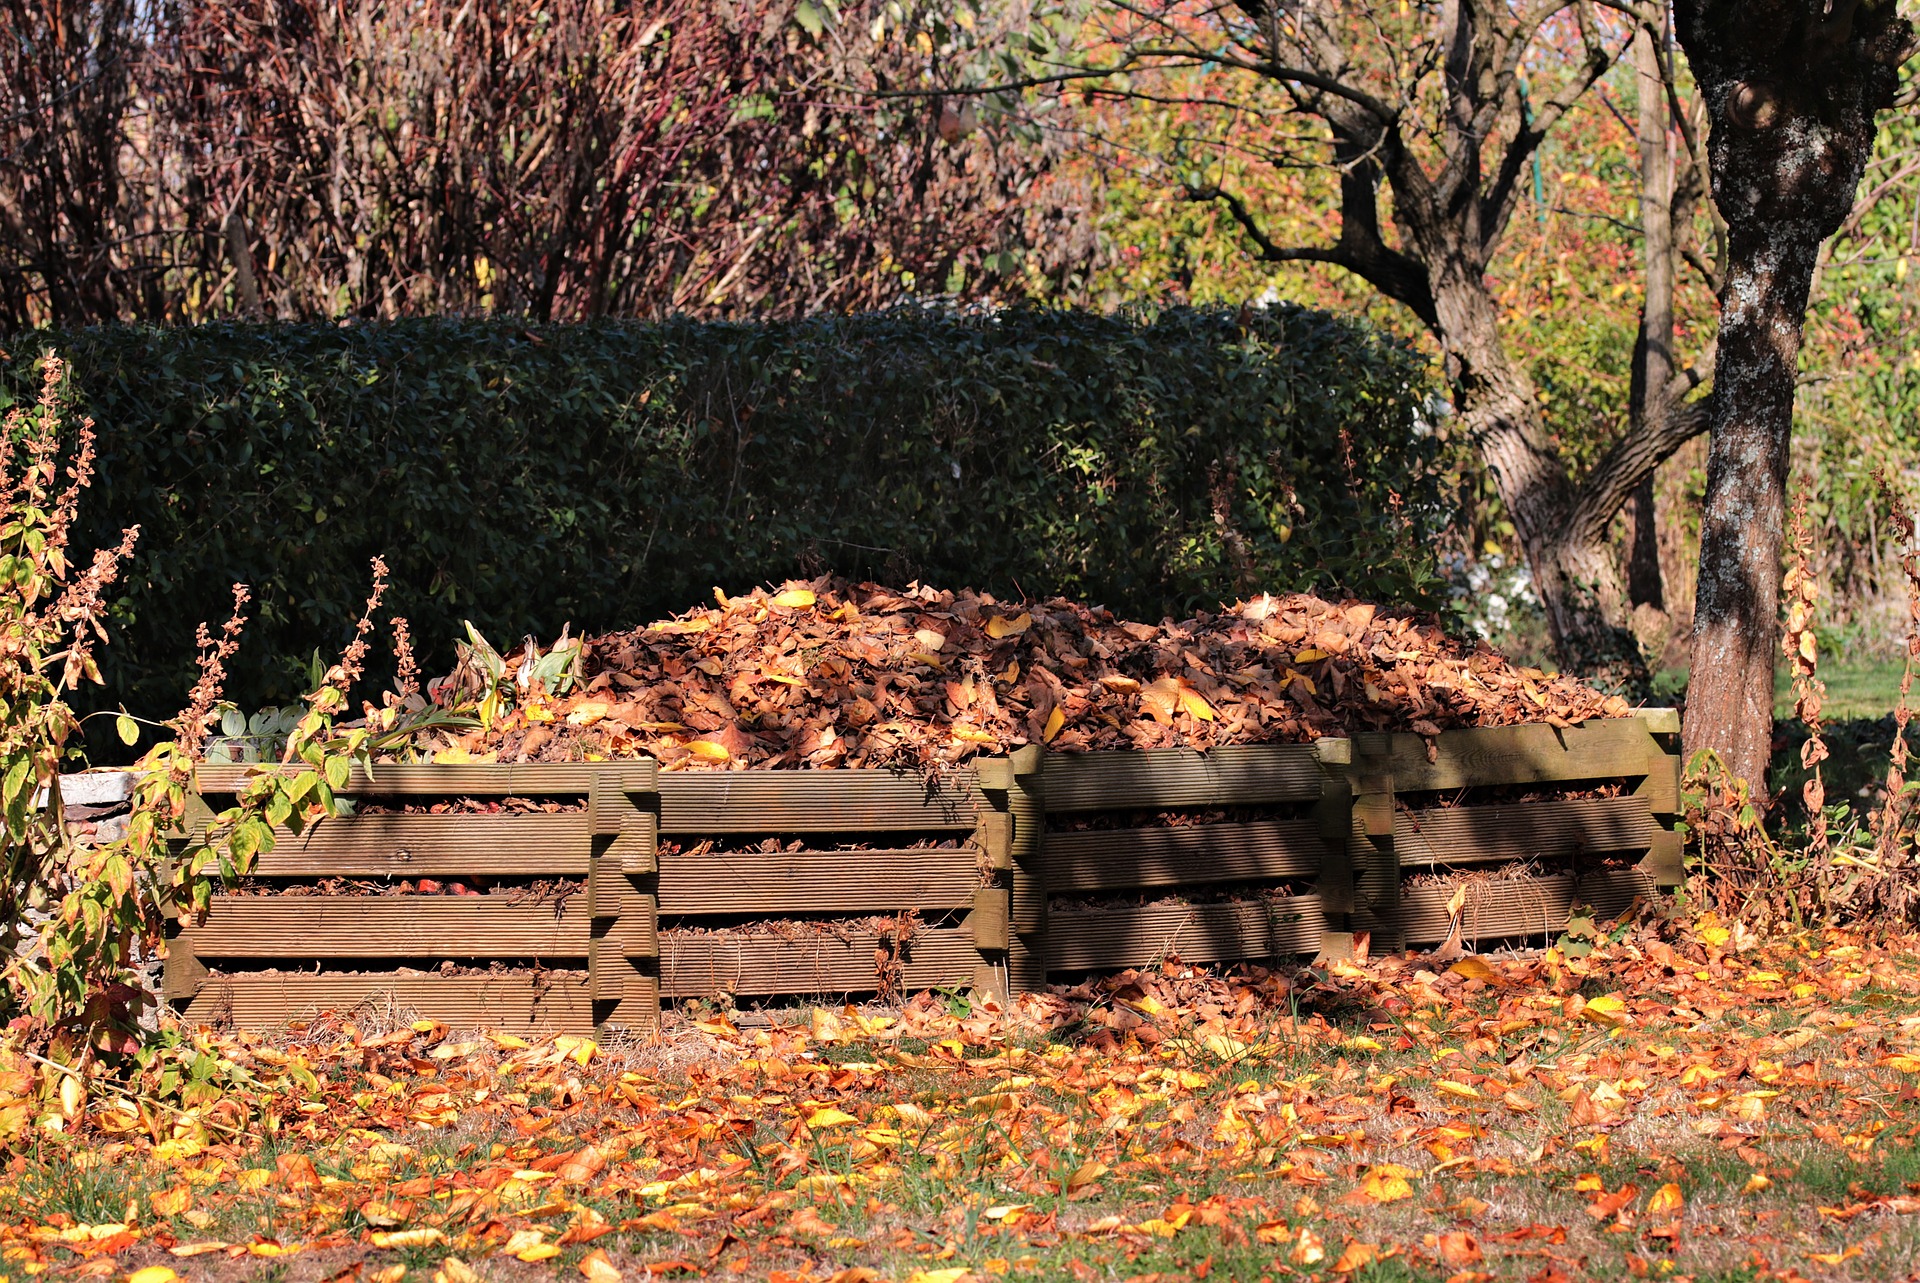 Comment utiliser les feuilles mortes au jardin ? - Blog jardin